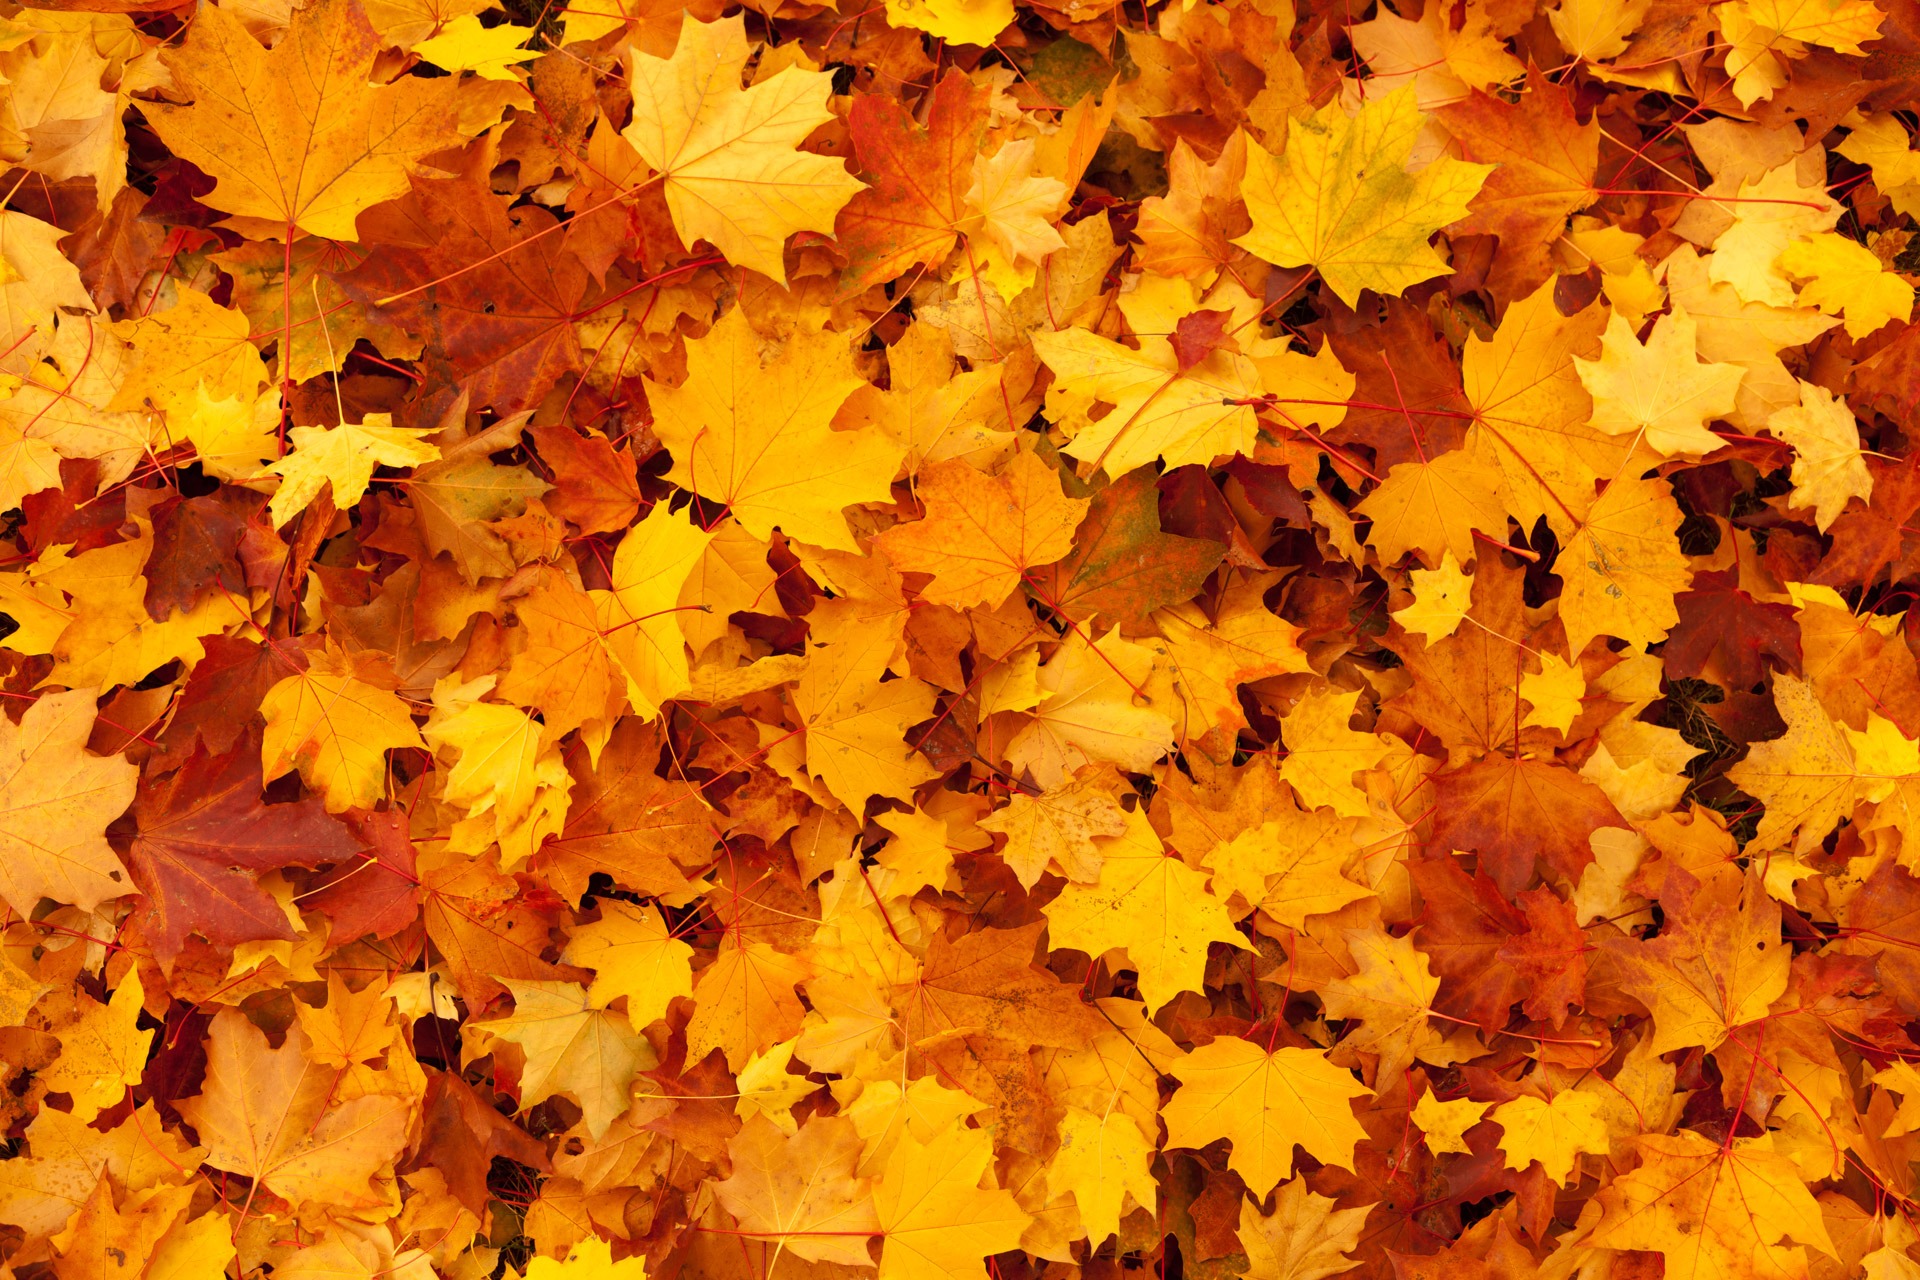 Autumn flattering maples on the ground